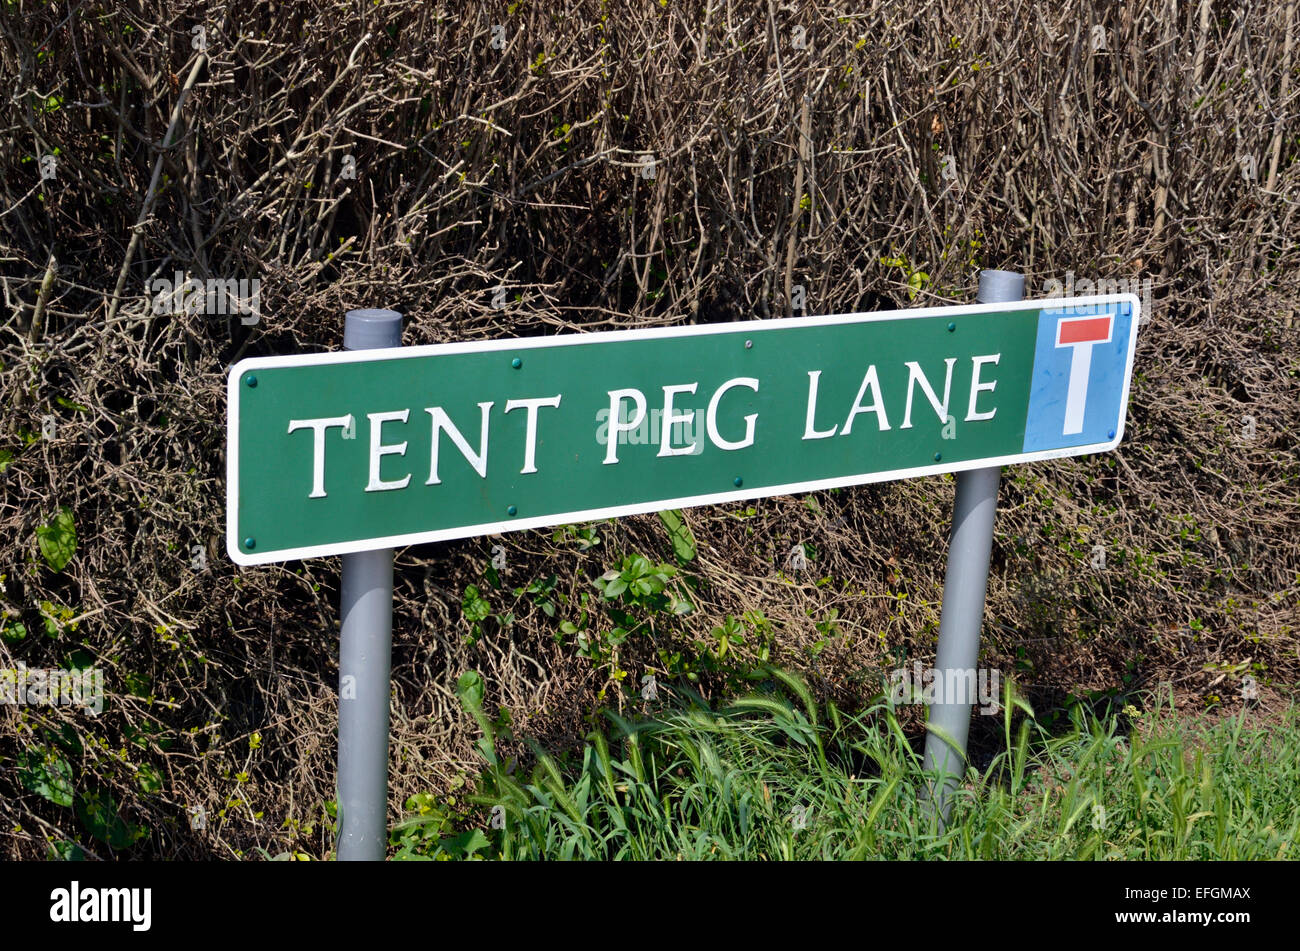 Tent Peg Lane street sign, Petts Wood, Bromley, London, UK Stock Photo